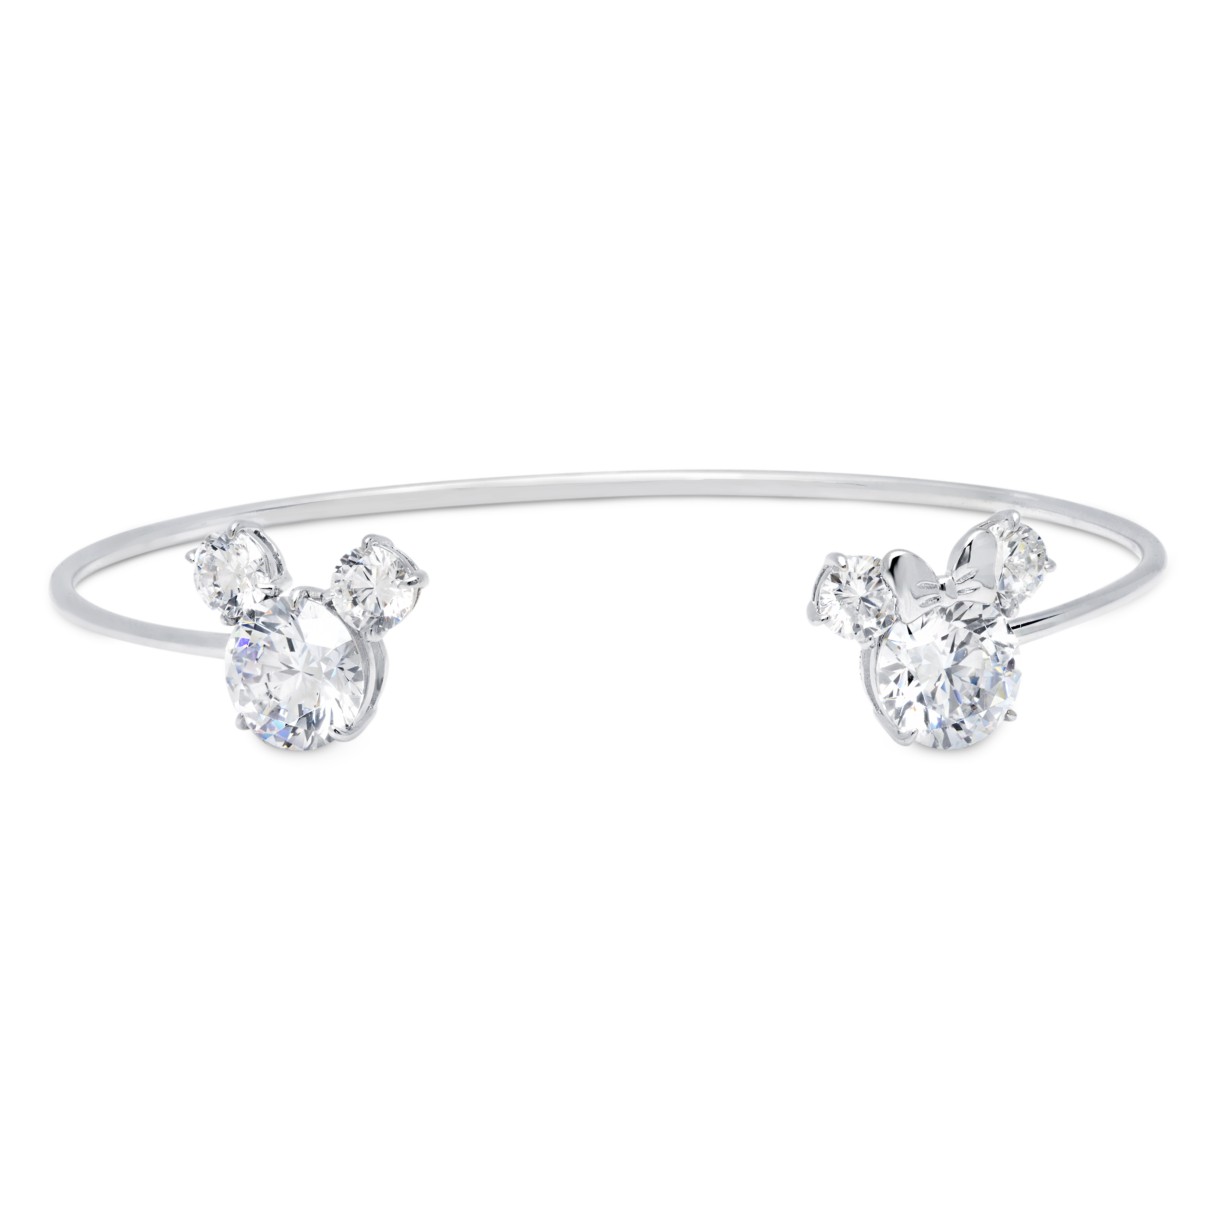 Mickey and Minnie Mouse Cuff Bracelet by CRISLU – Platinum